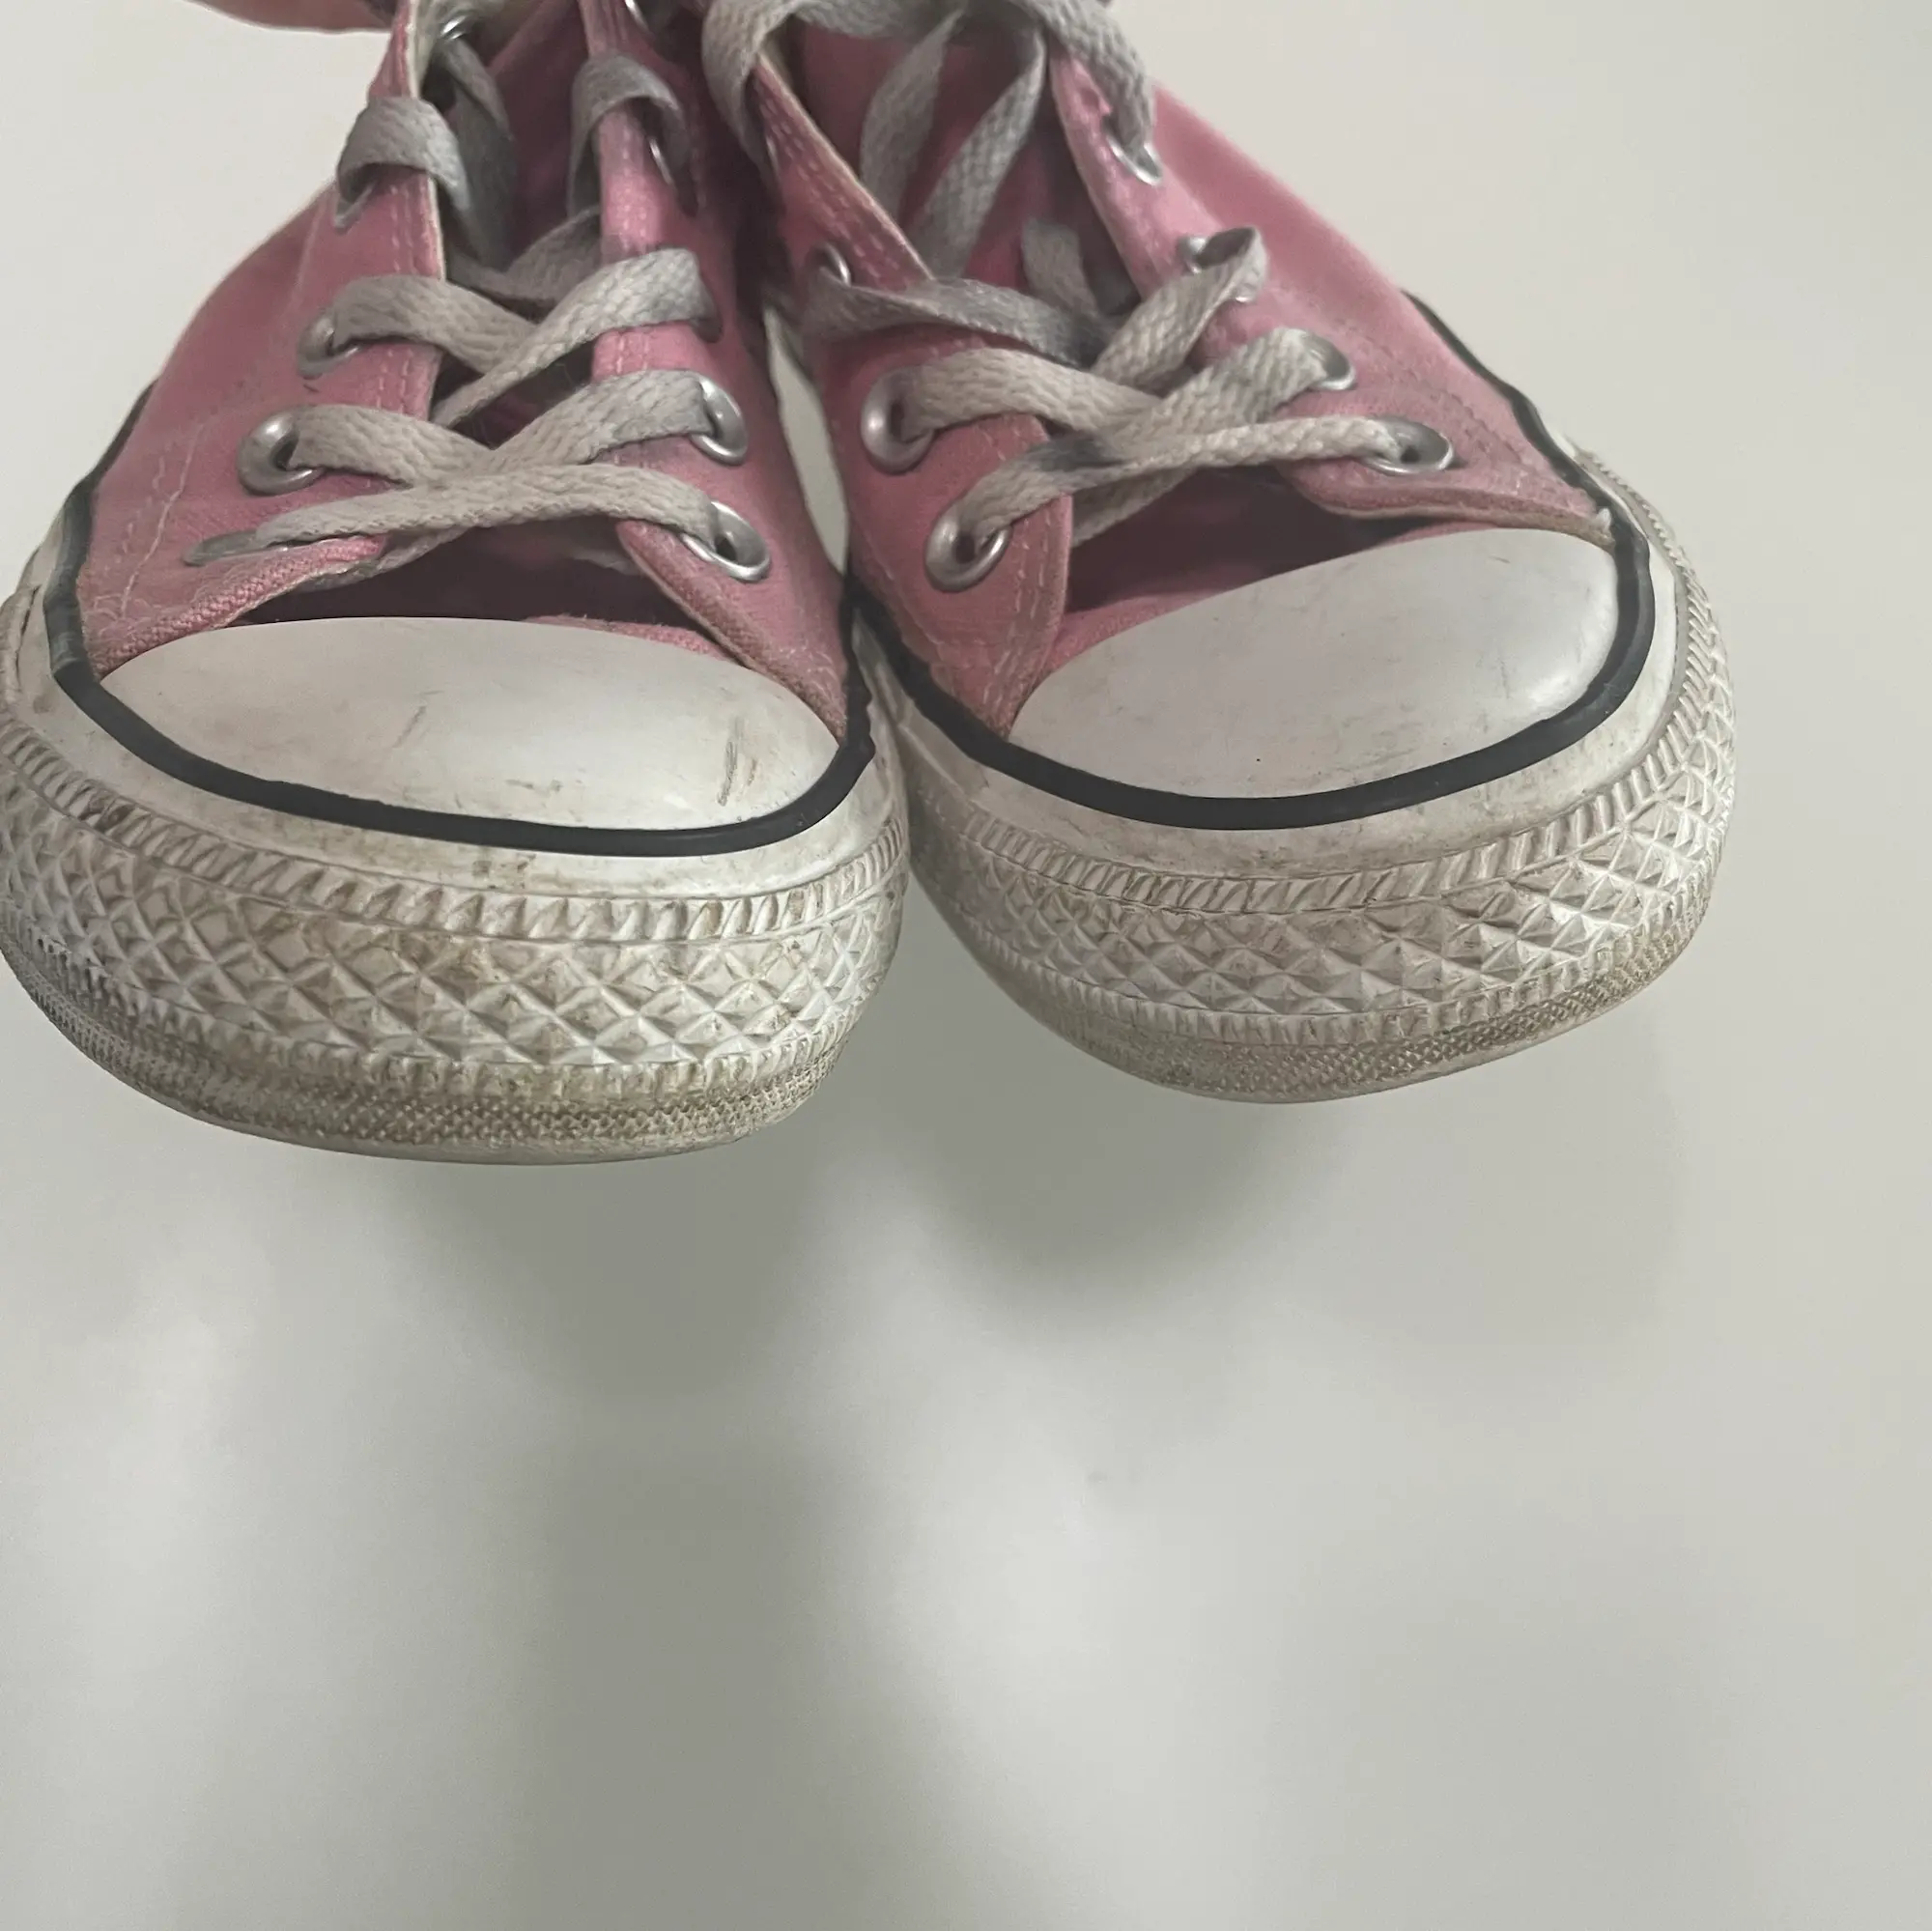 Converse sneakers